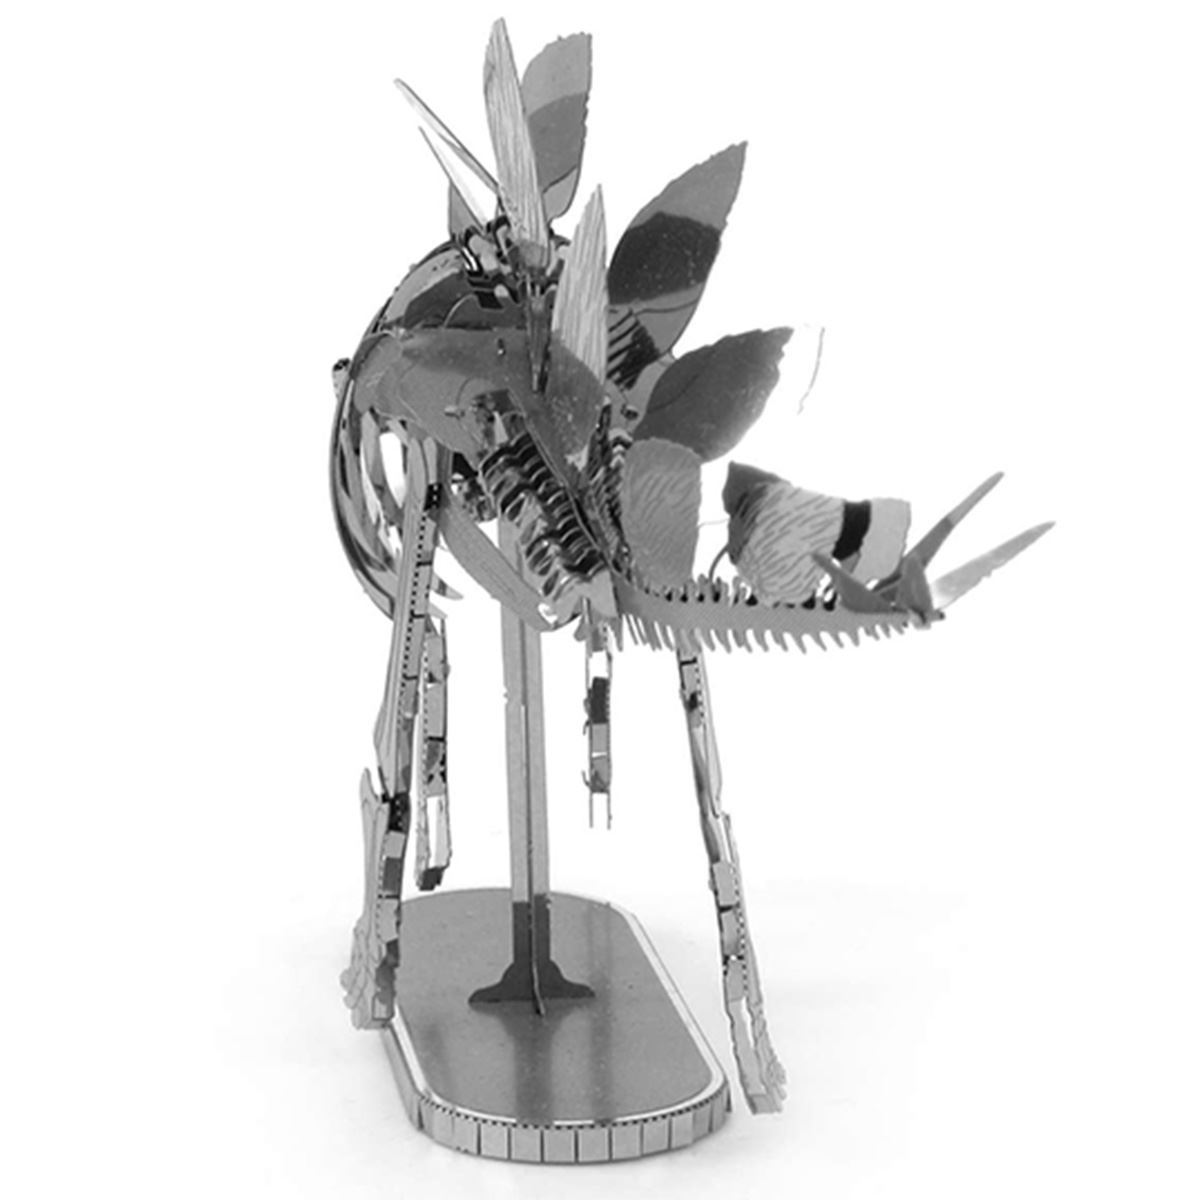 Metal Earth - Stegosaurus | Byggsats i metall